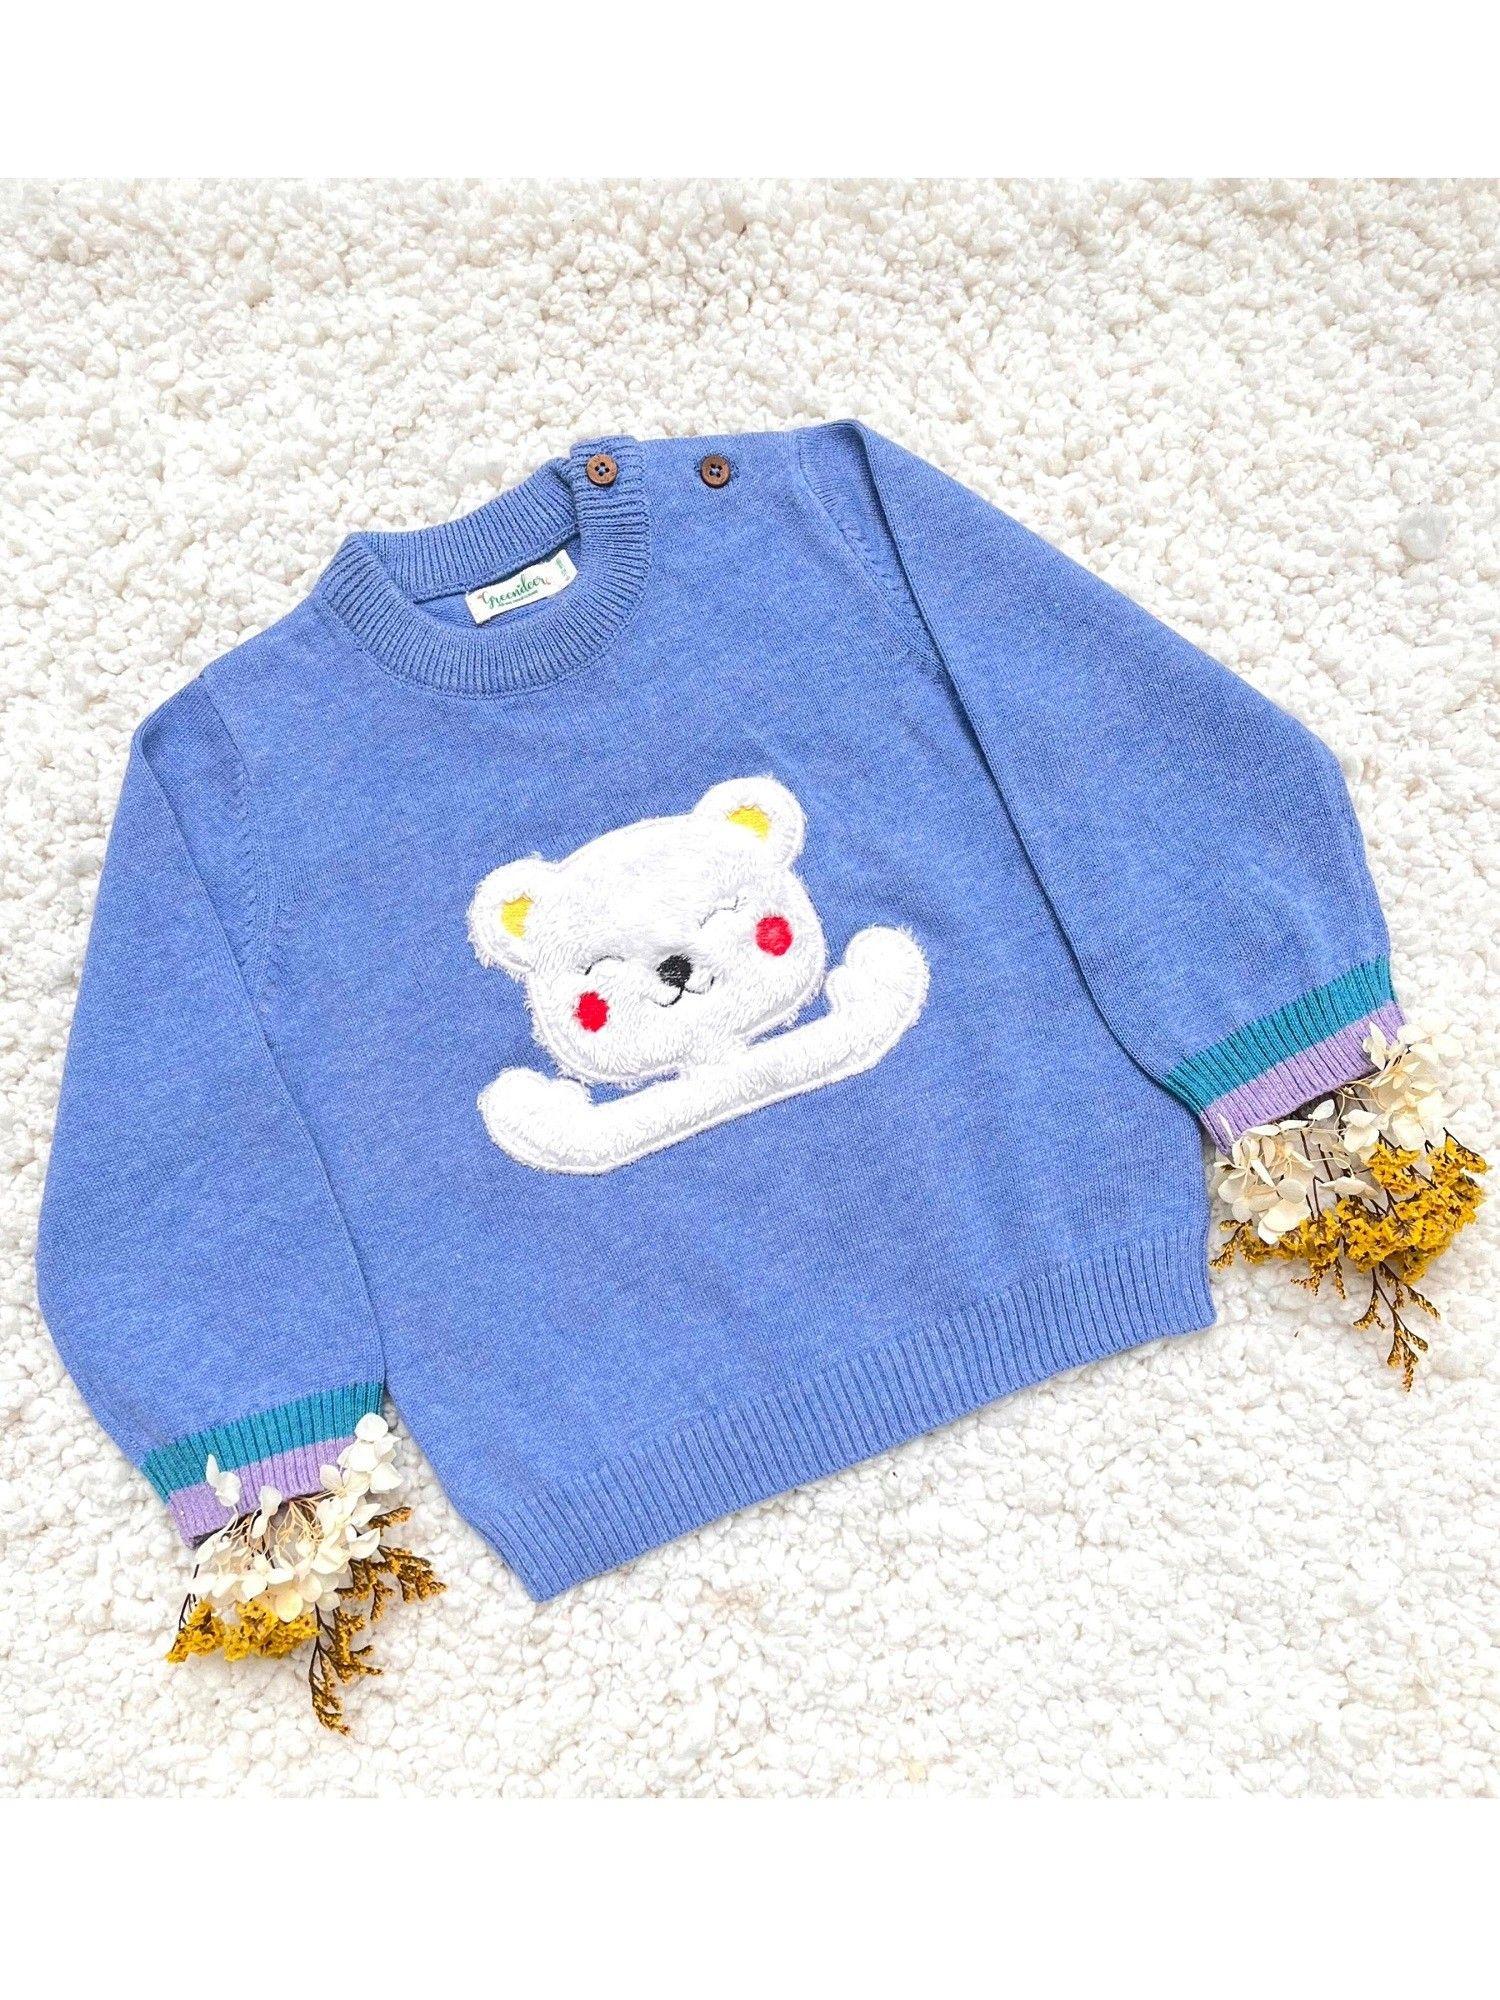 cuddly bear blue sweater